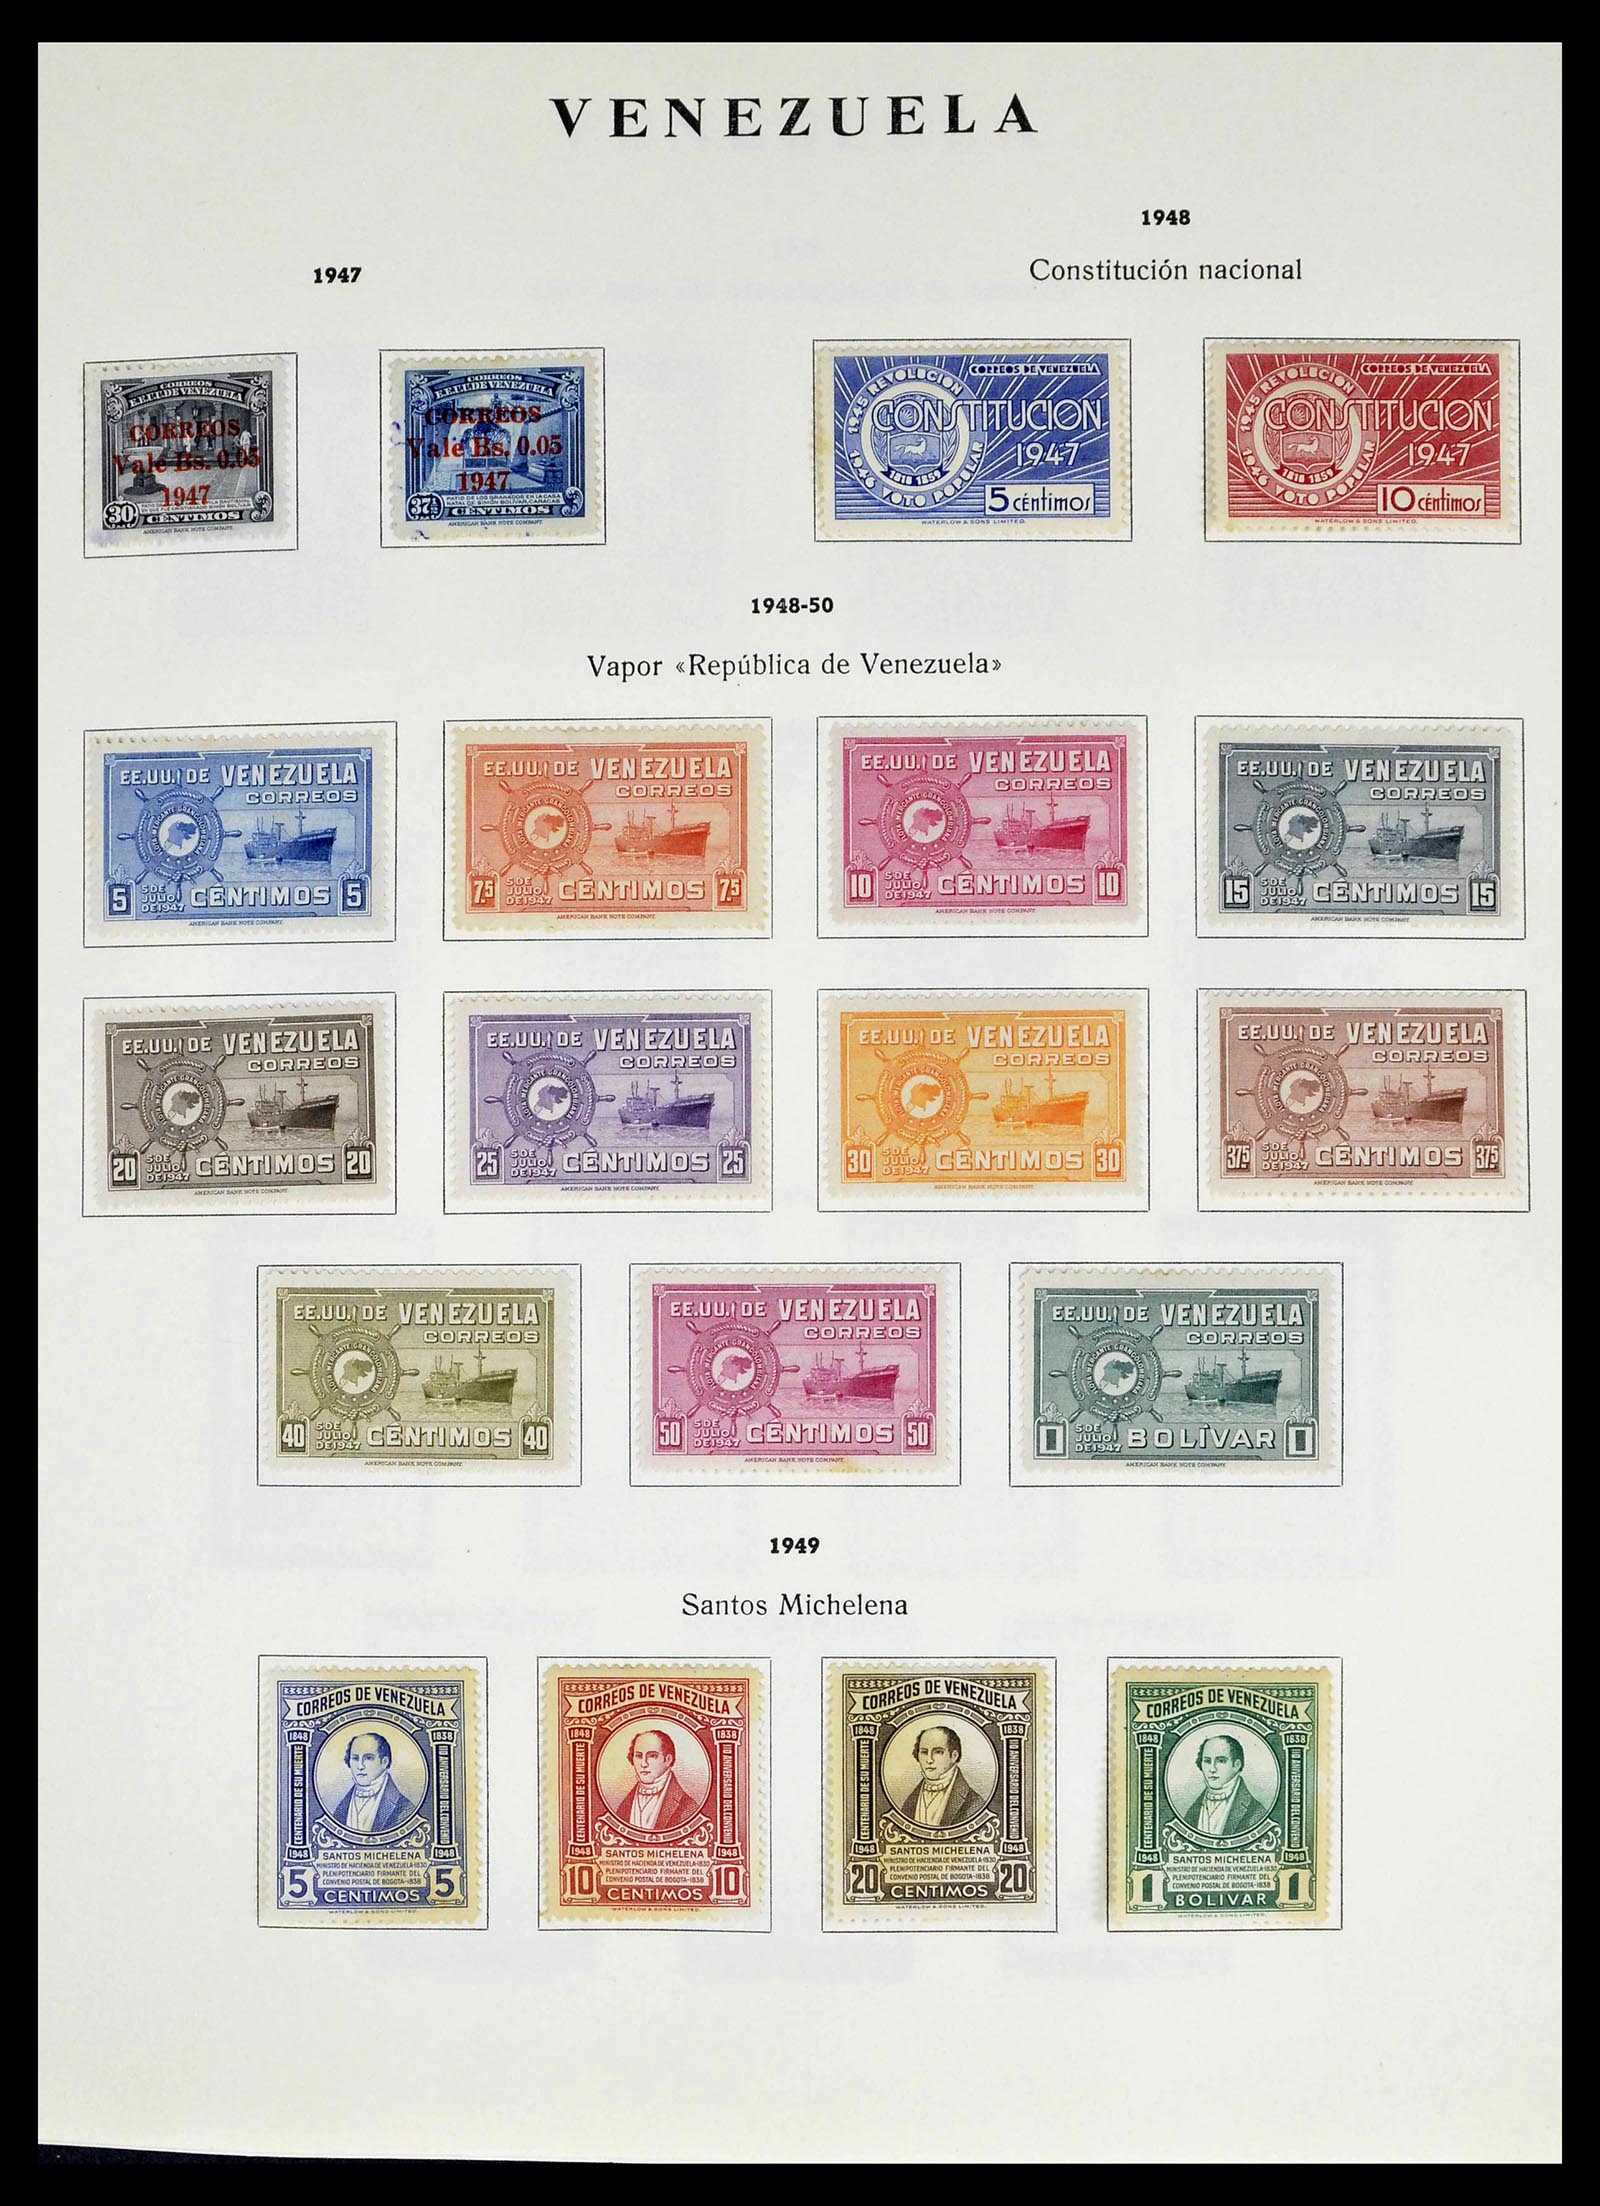 39223 0020 - Stamp collection 39223 Venezuela 1859-1984.